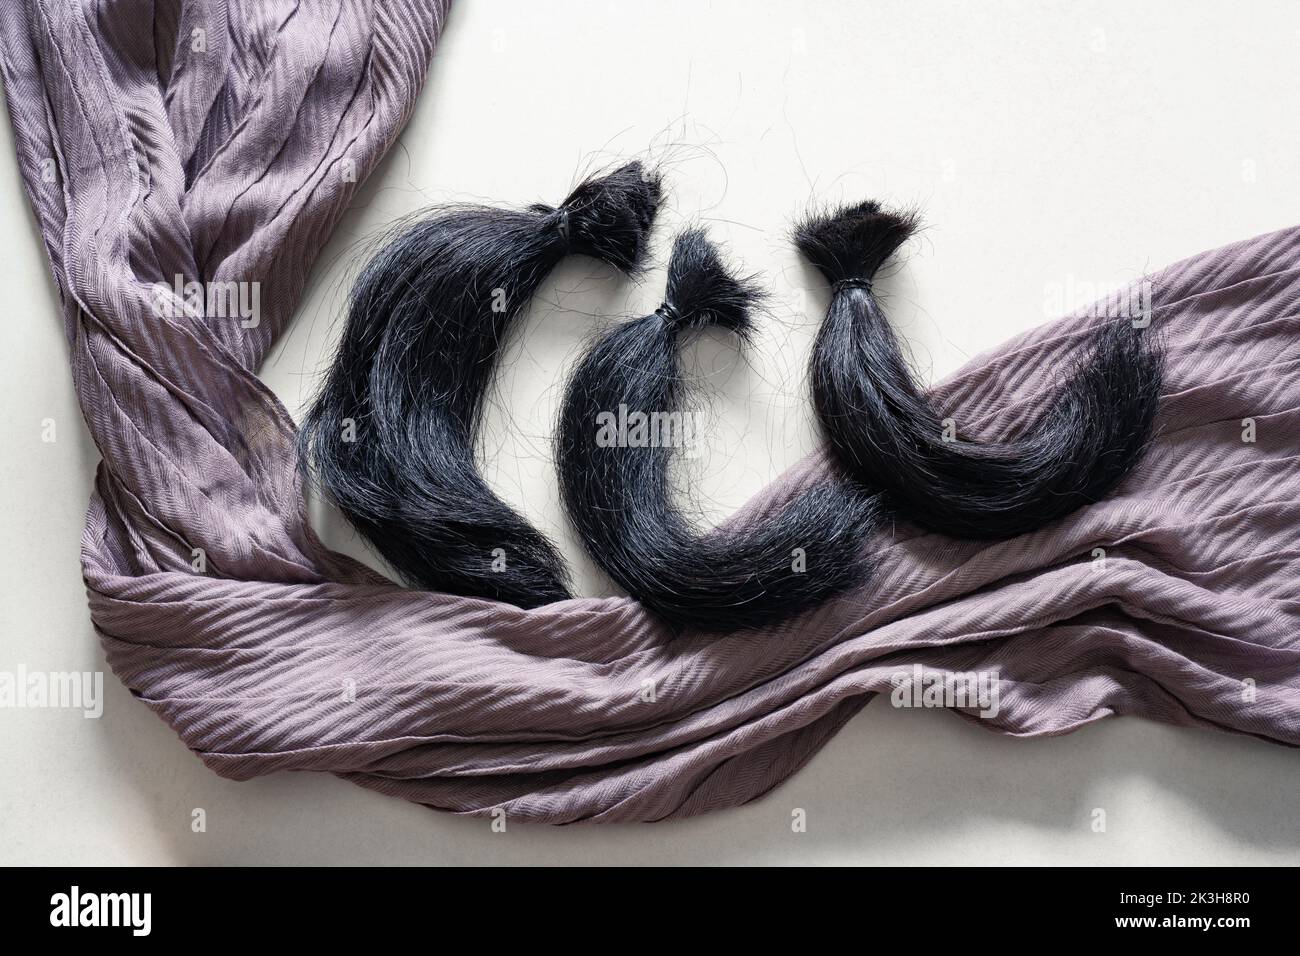 Locks of hair and head scarf Stock Photo